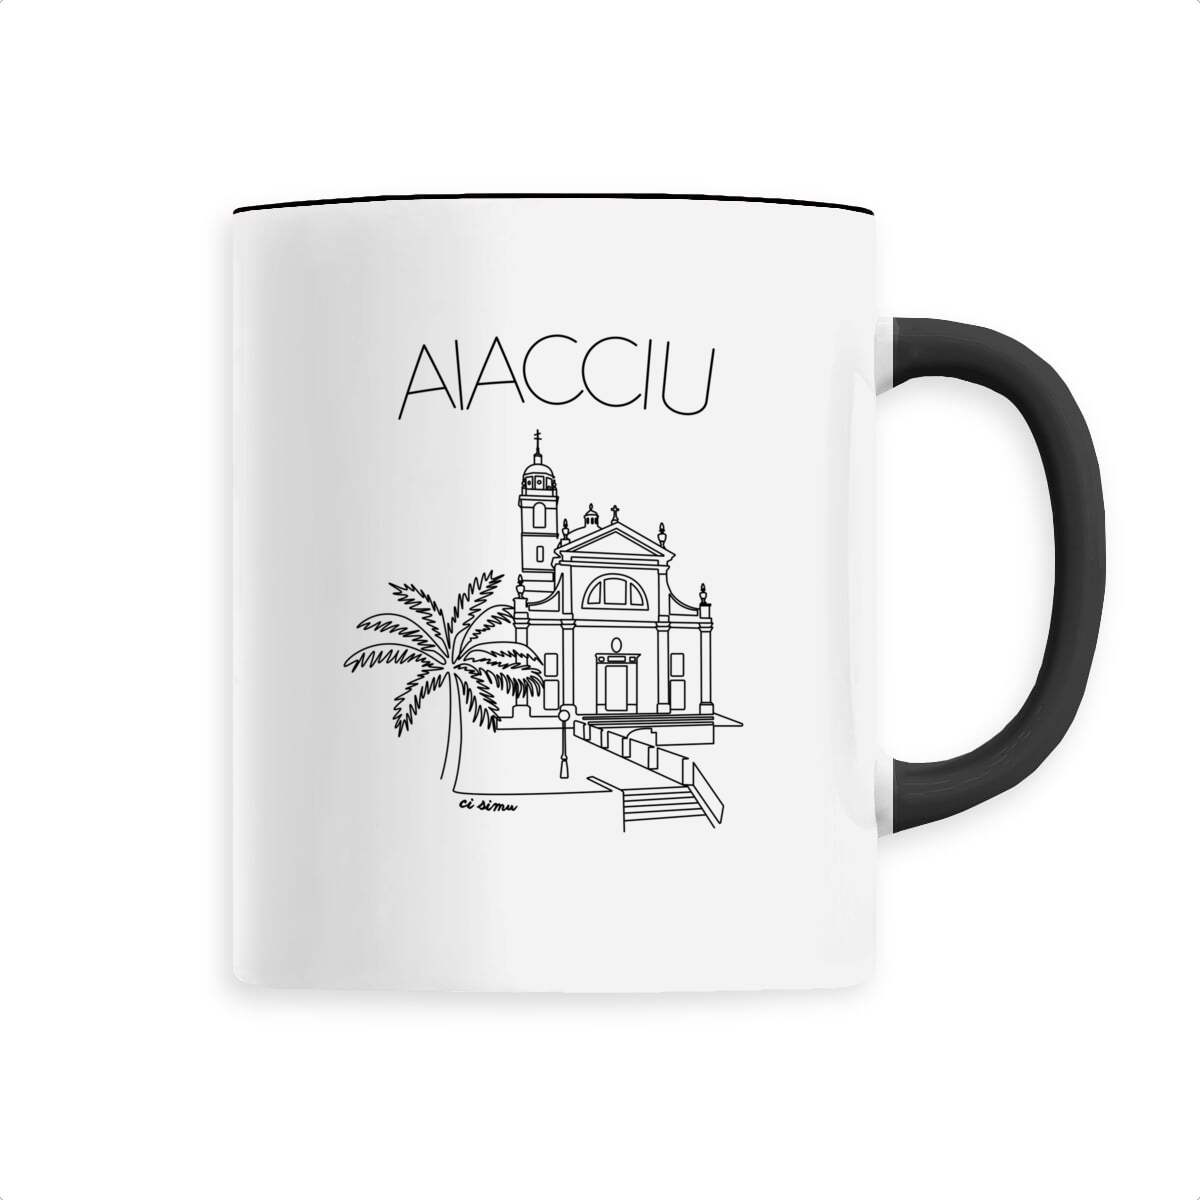 Mug d'Ajaccio 